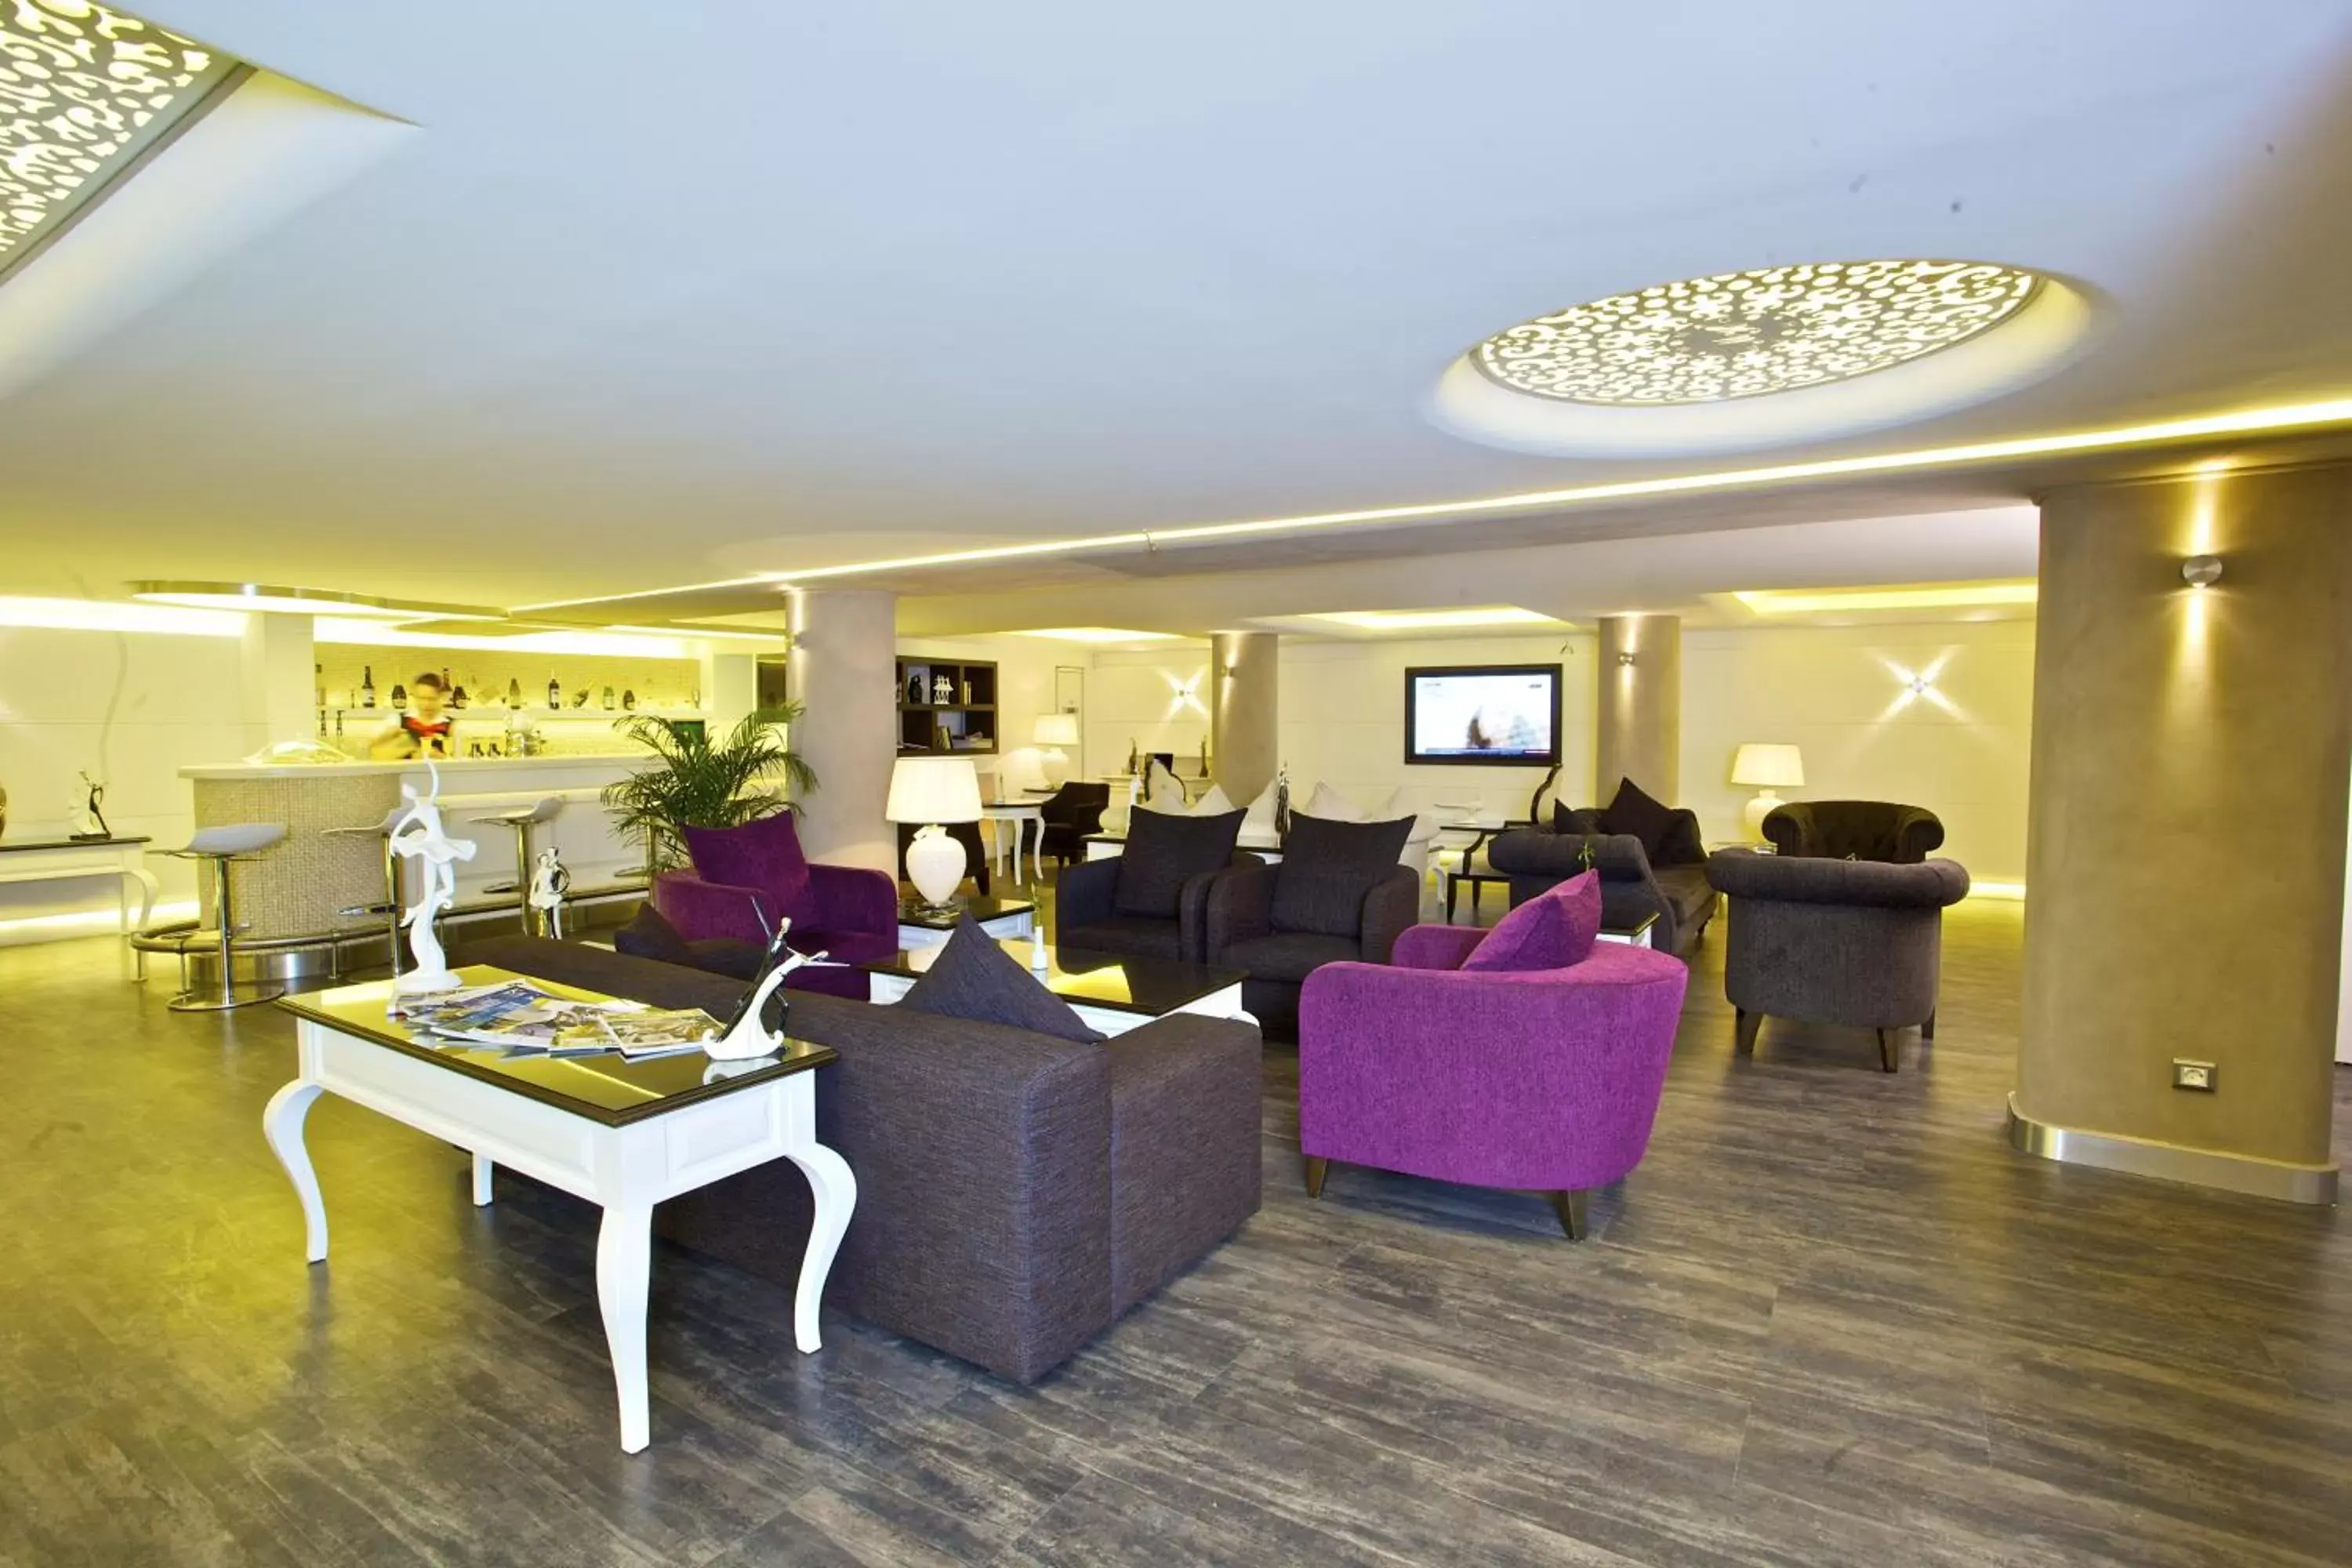 Lobby or reception in Monaco Hotel